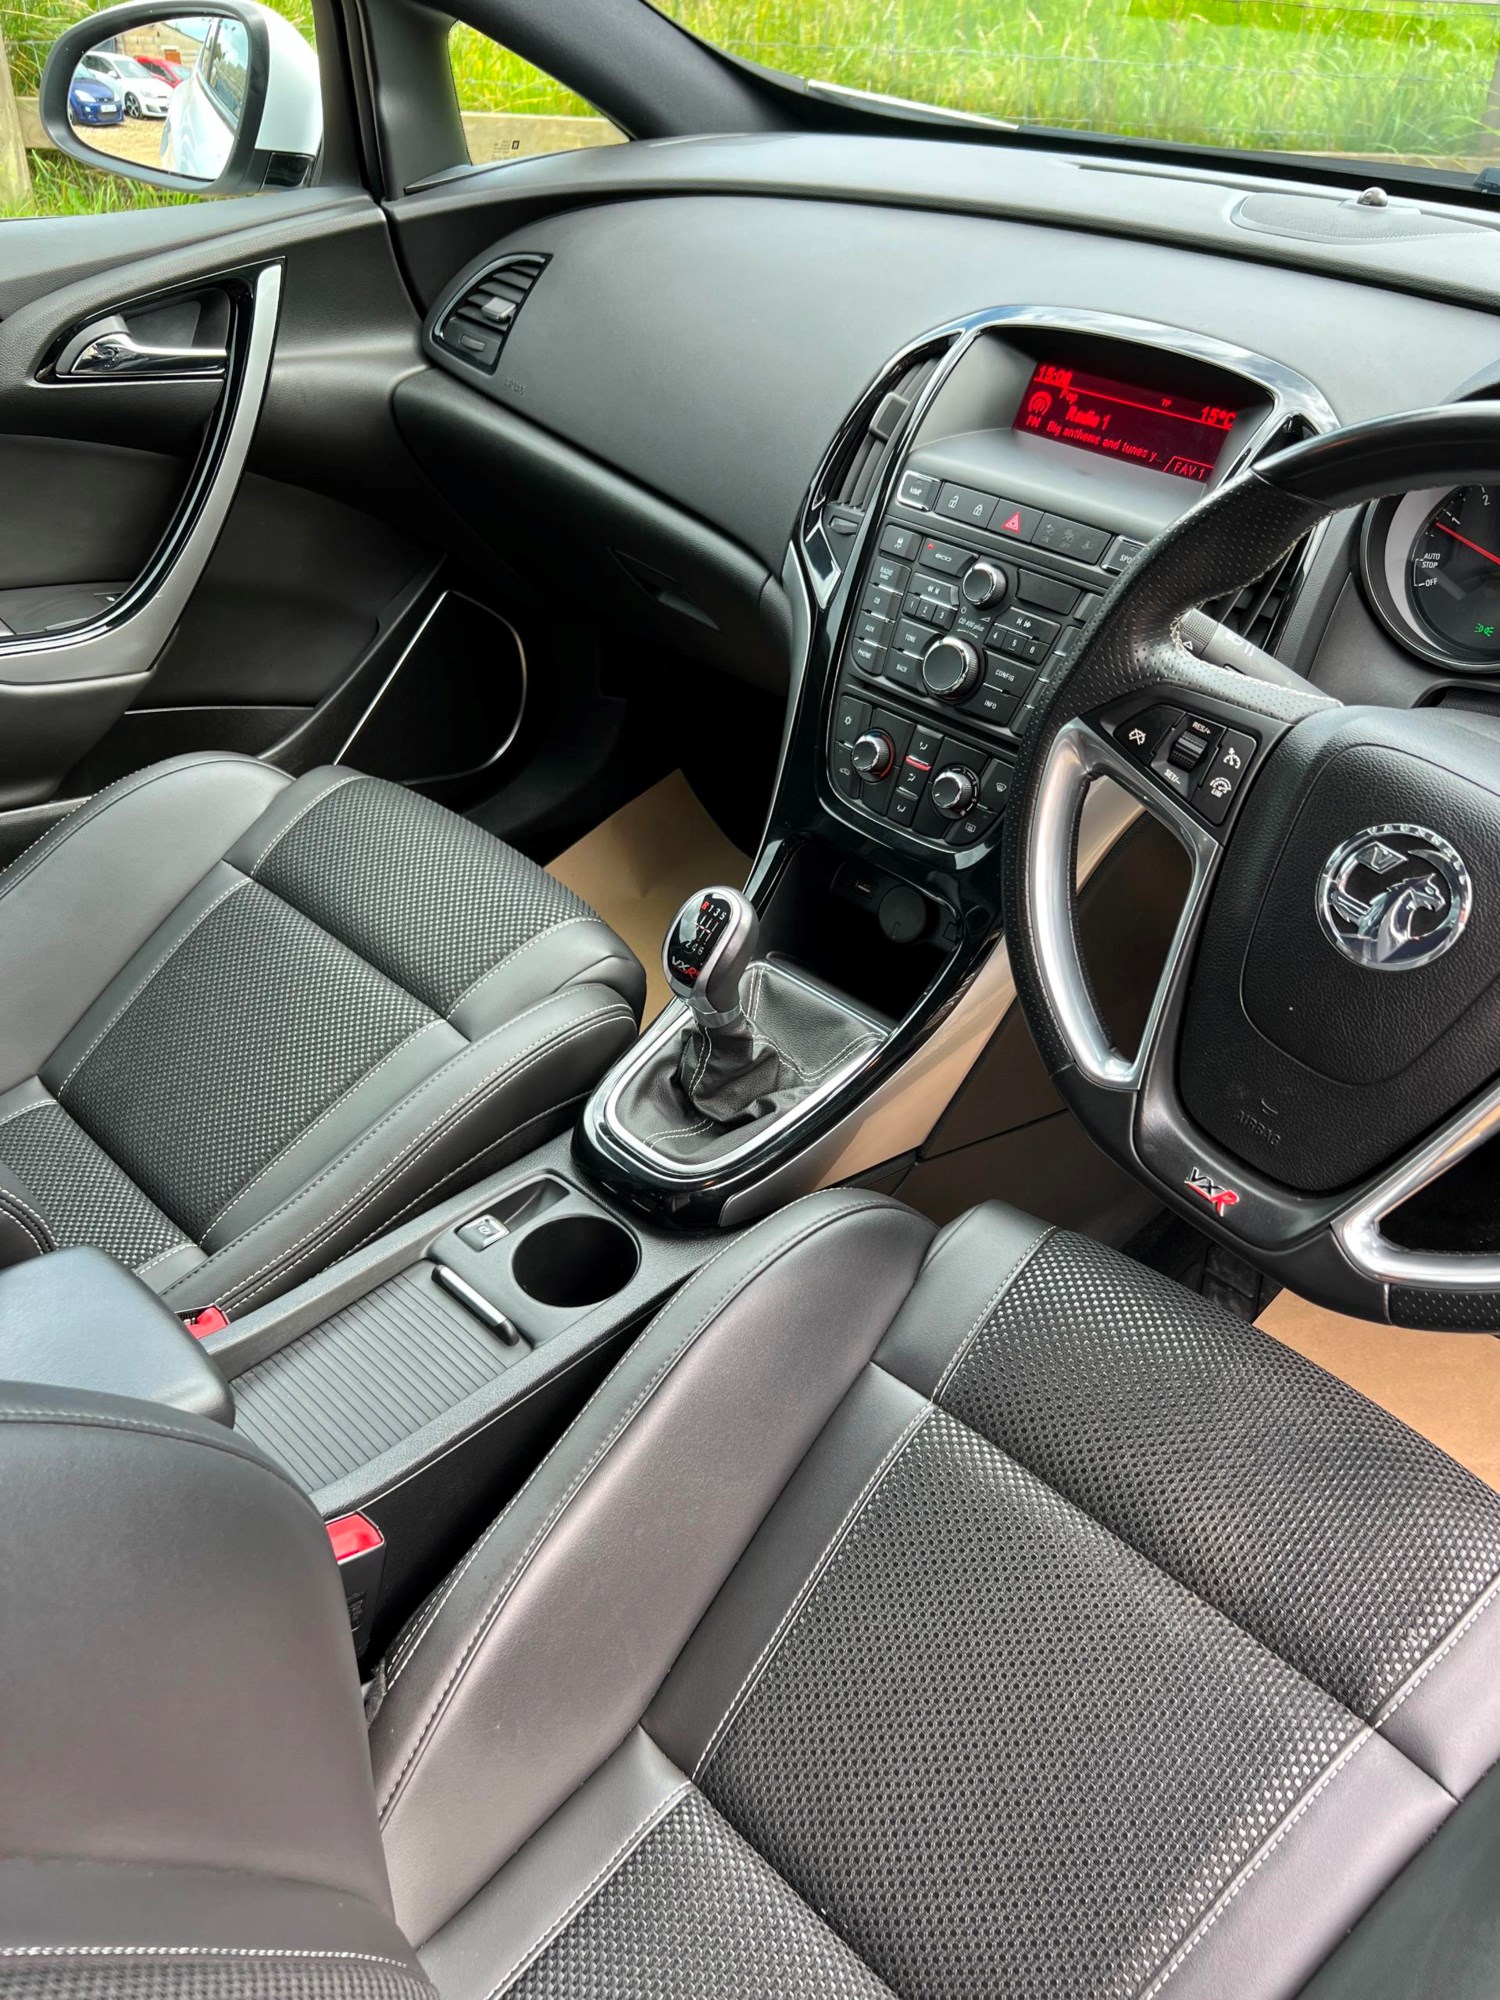 Vauxhall Astra GTC Listing Image